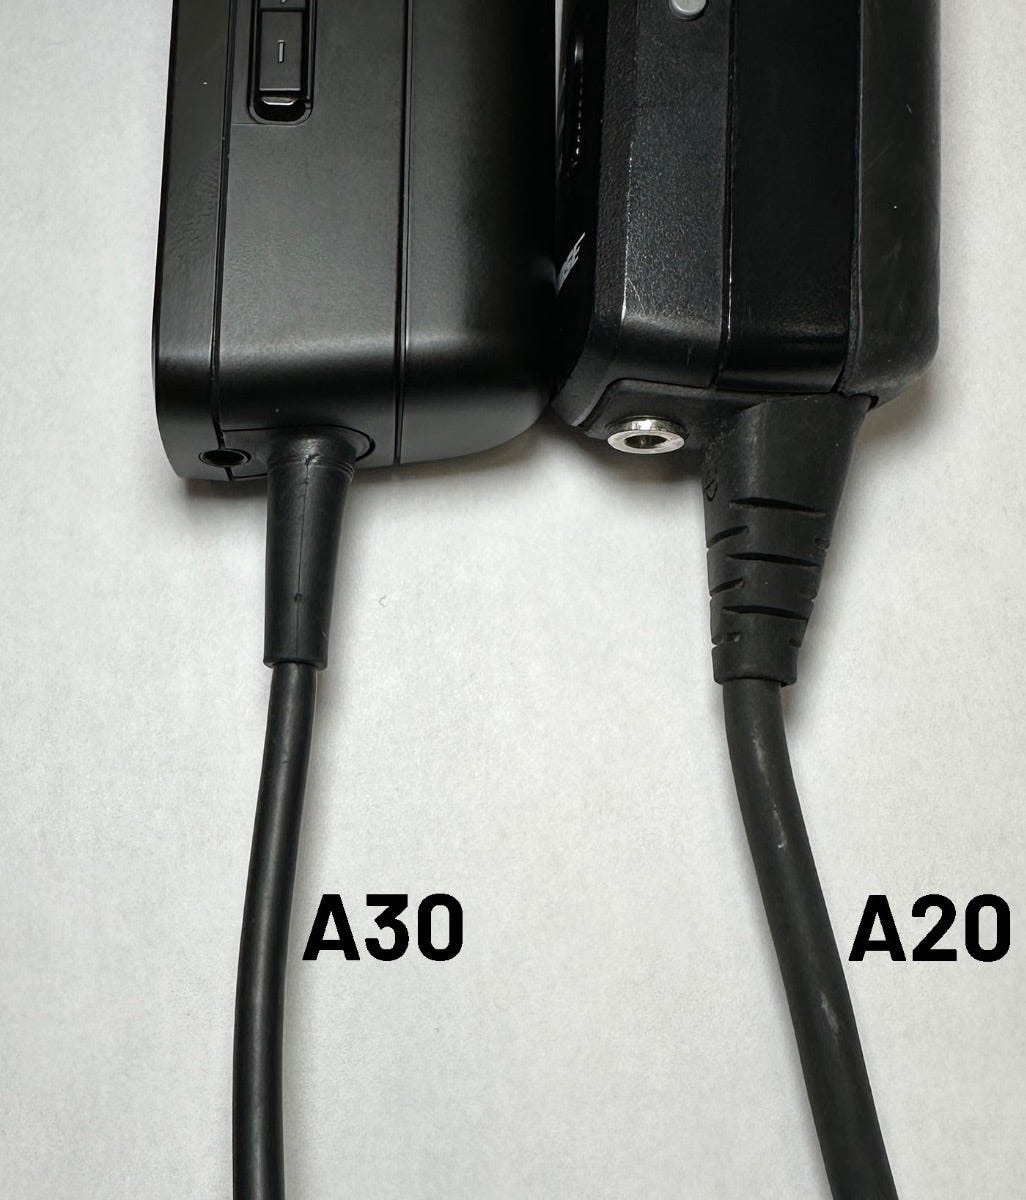 Bose cable comparison